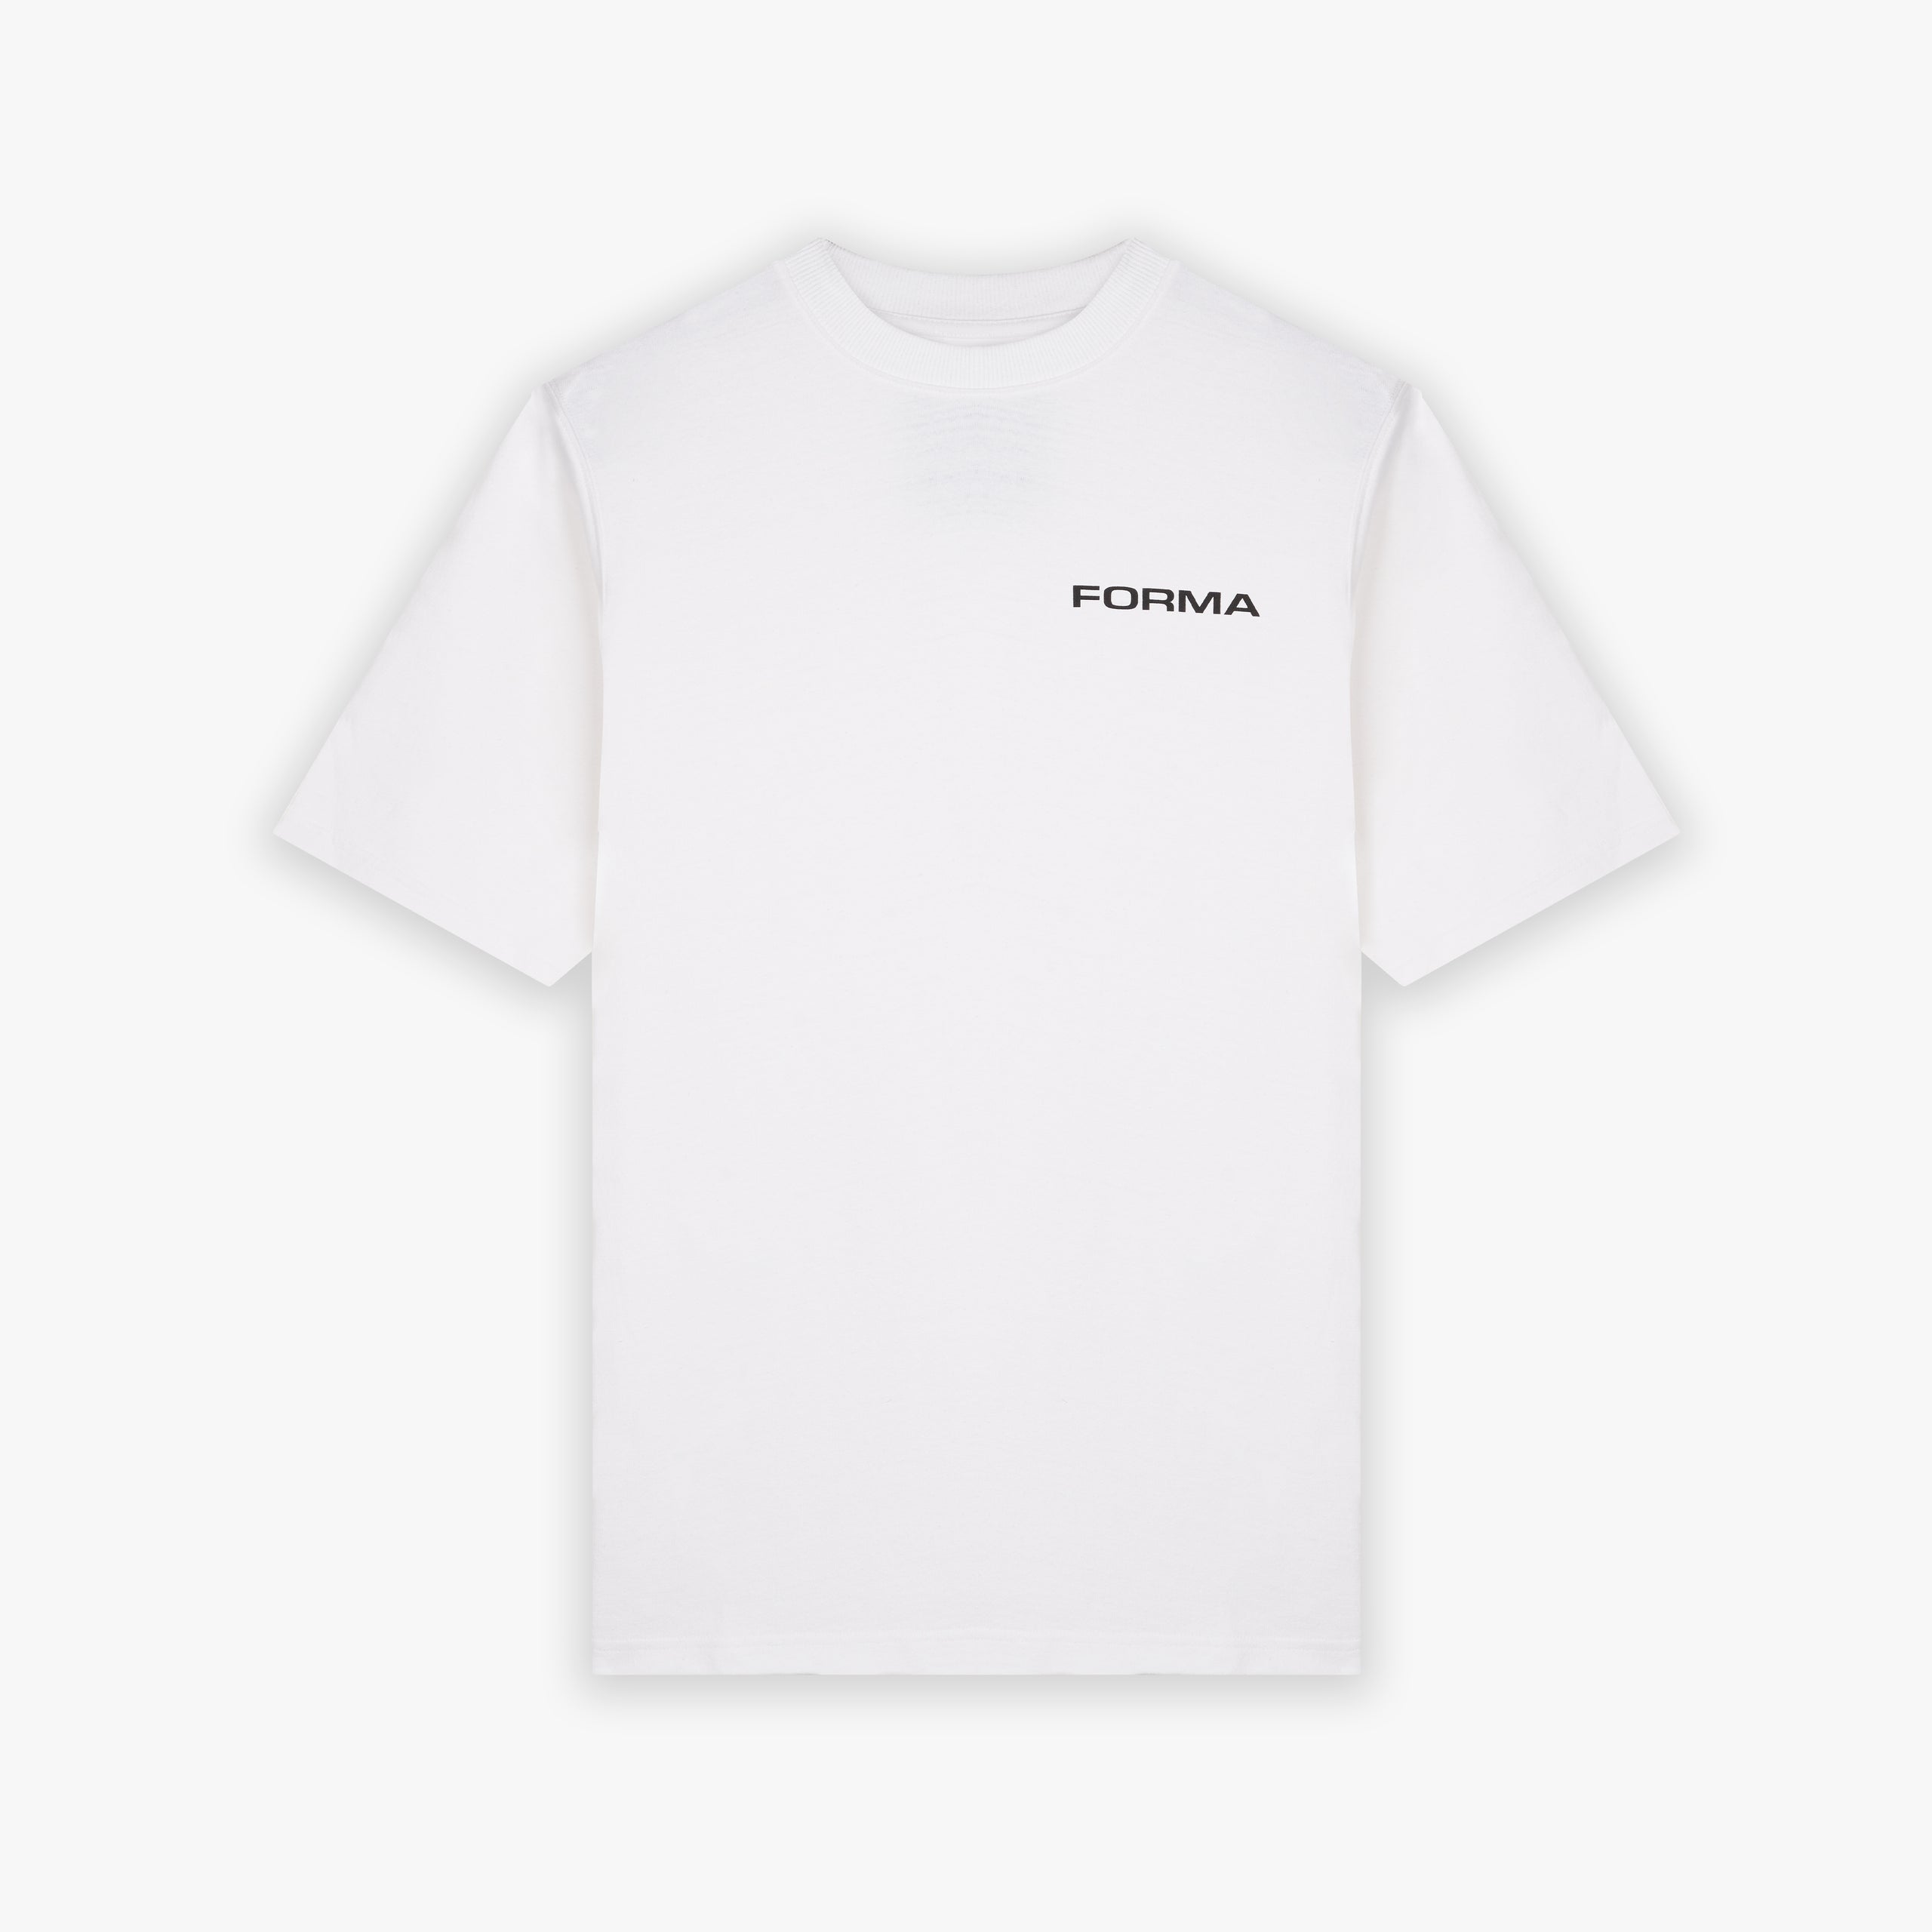 Forma classic white T-shirt